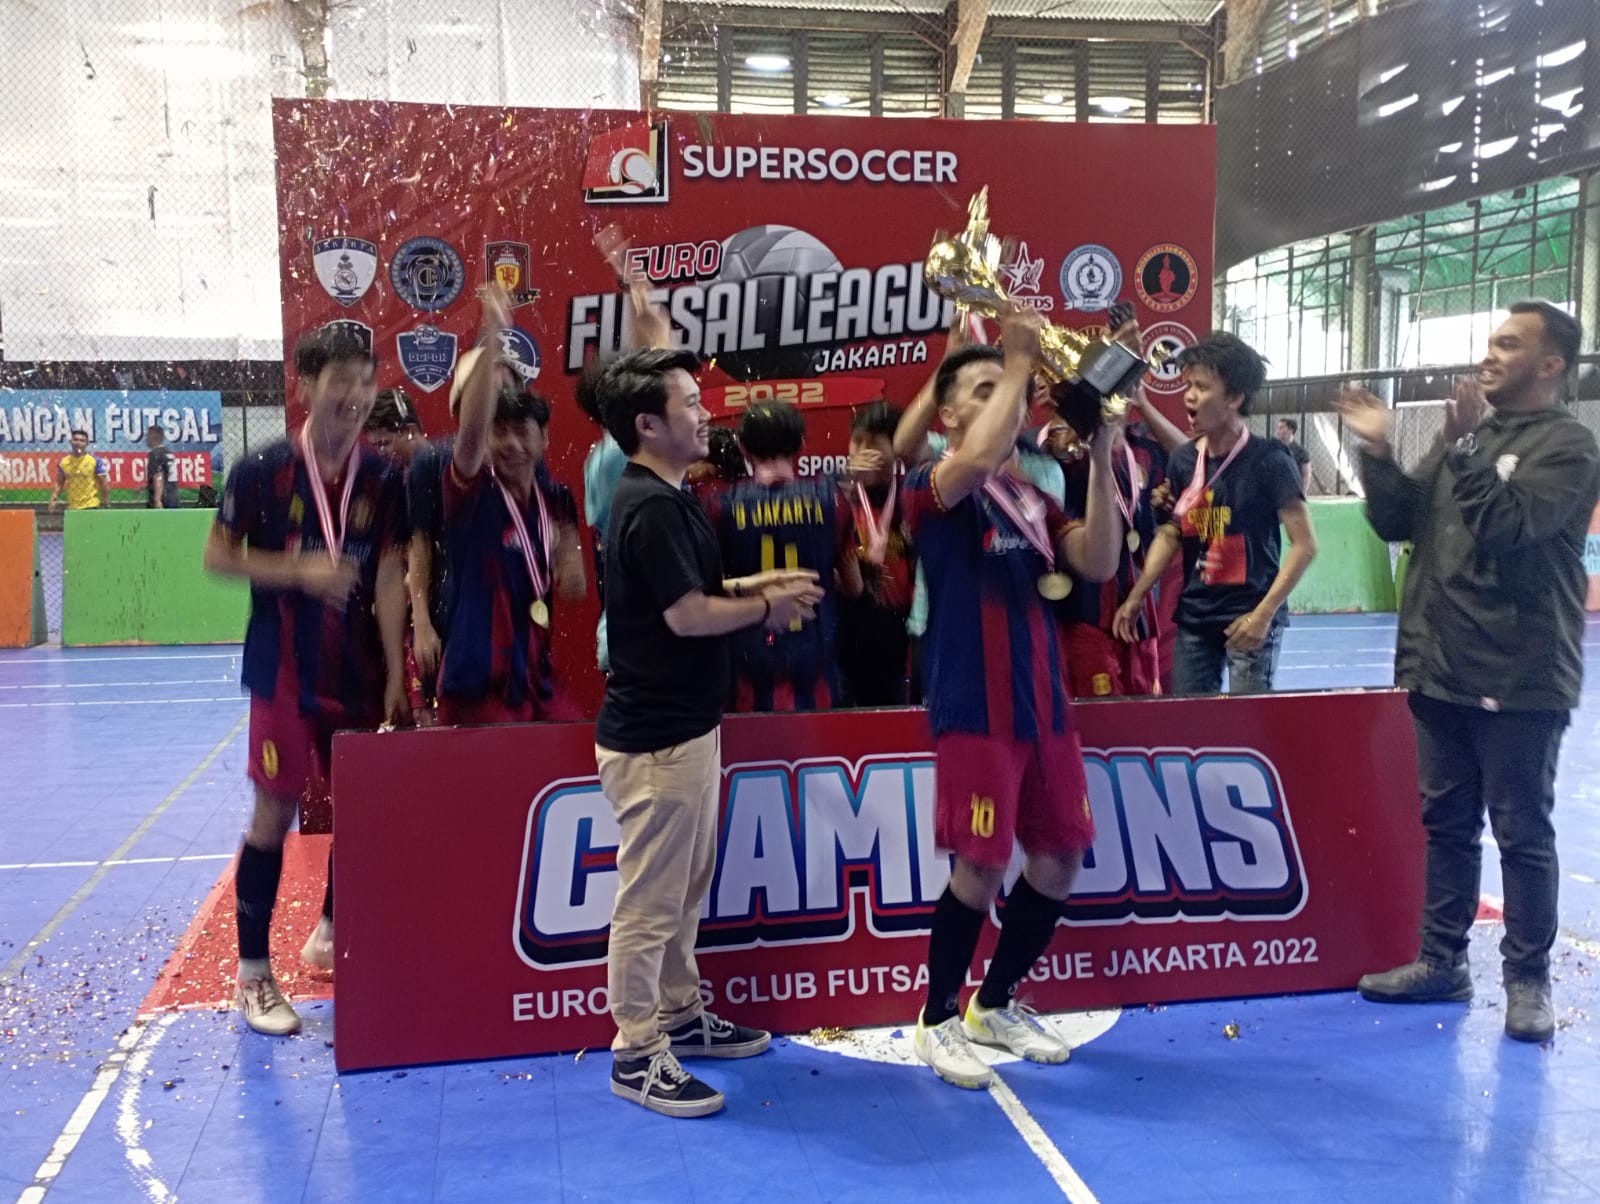 Liga Futsal Euro Jakarta Berakhir, Indobarca Juara